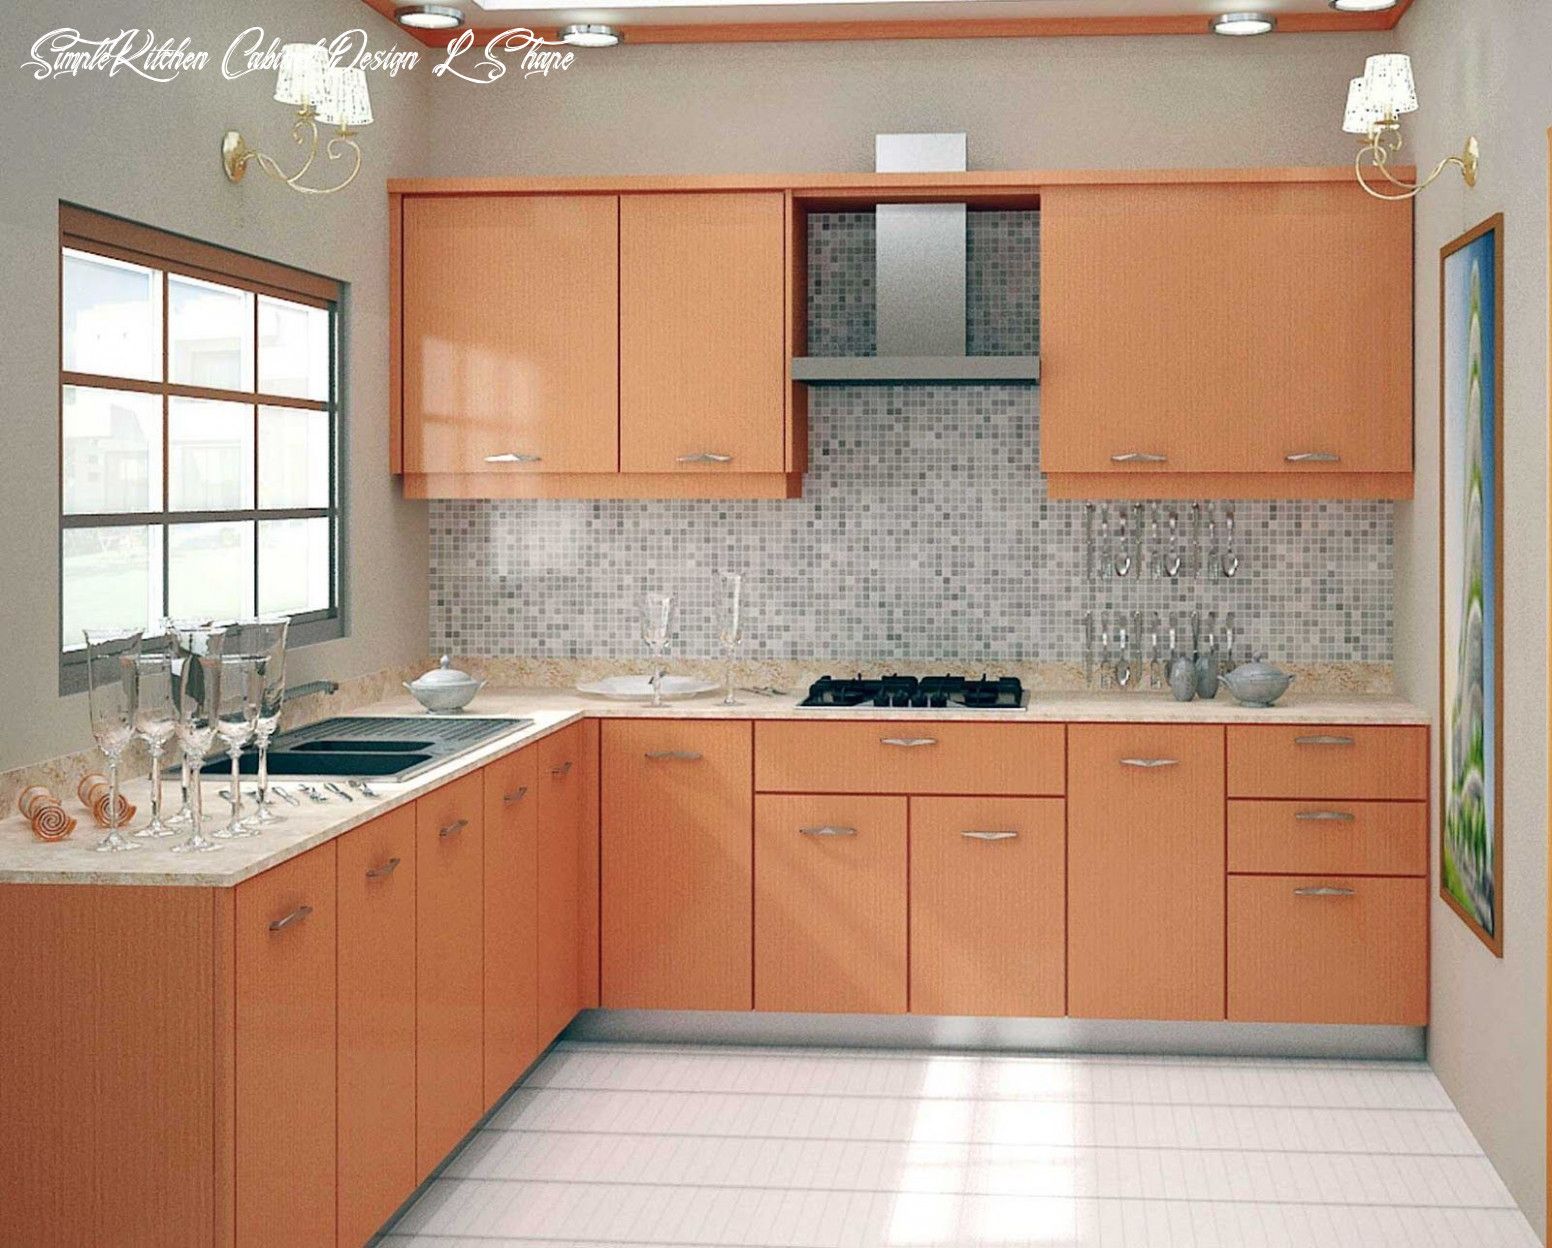 simple kitchen interior design pictures